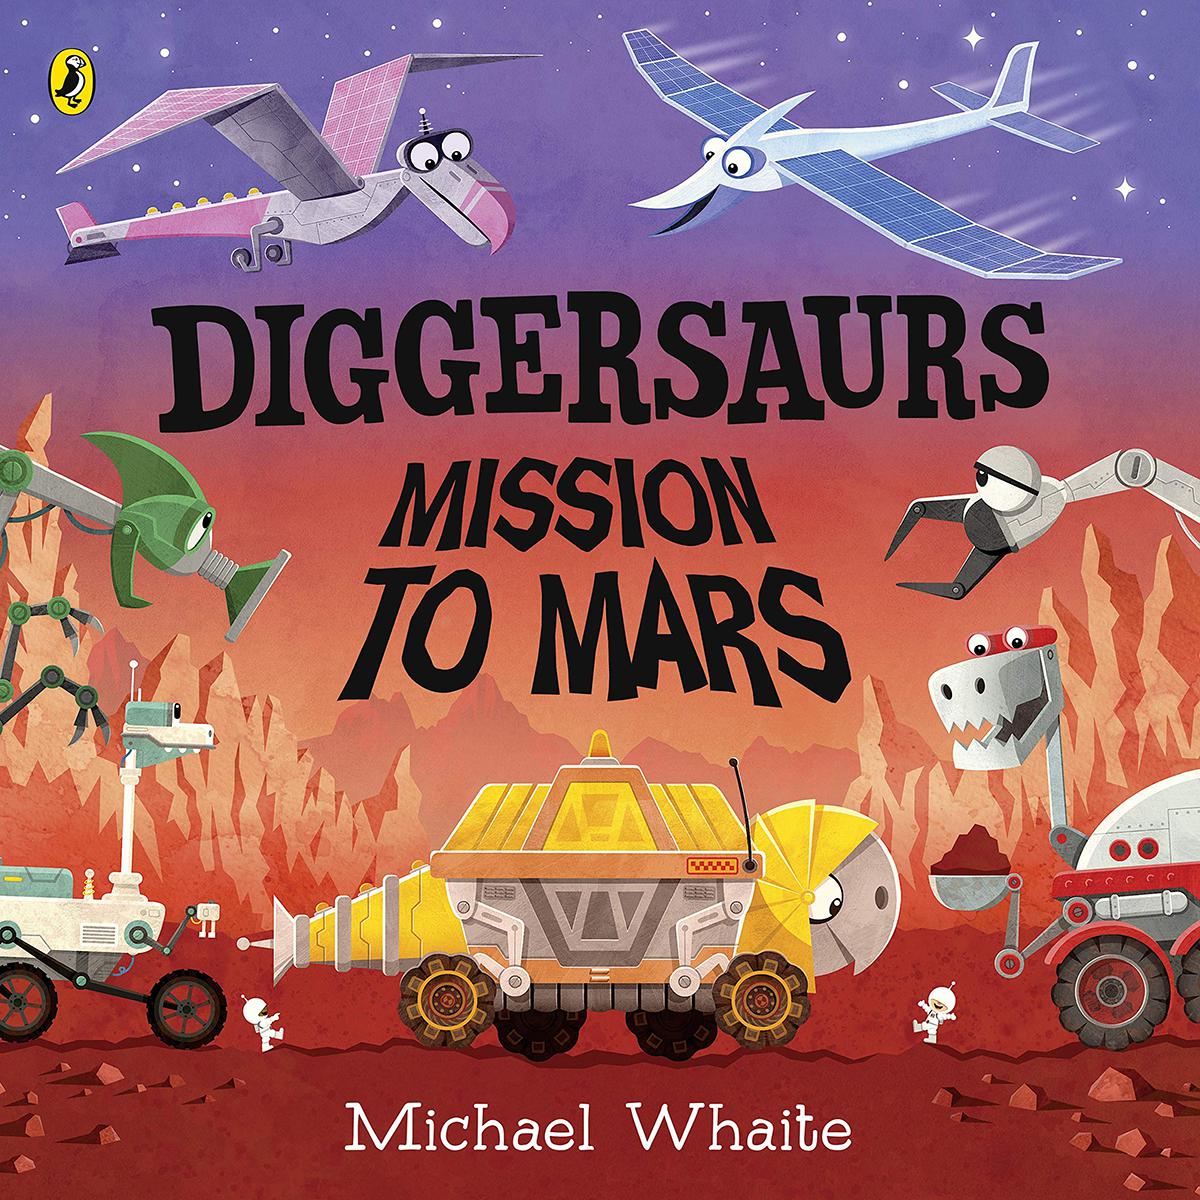  Diggersaurus: Mission to Mars 